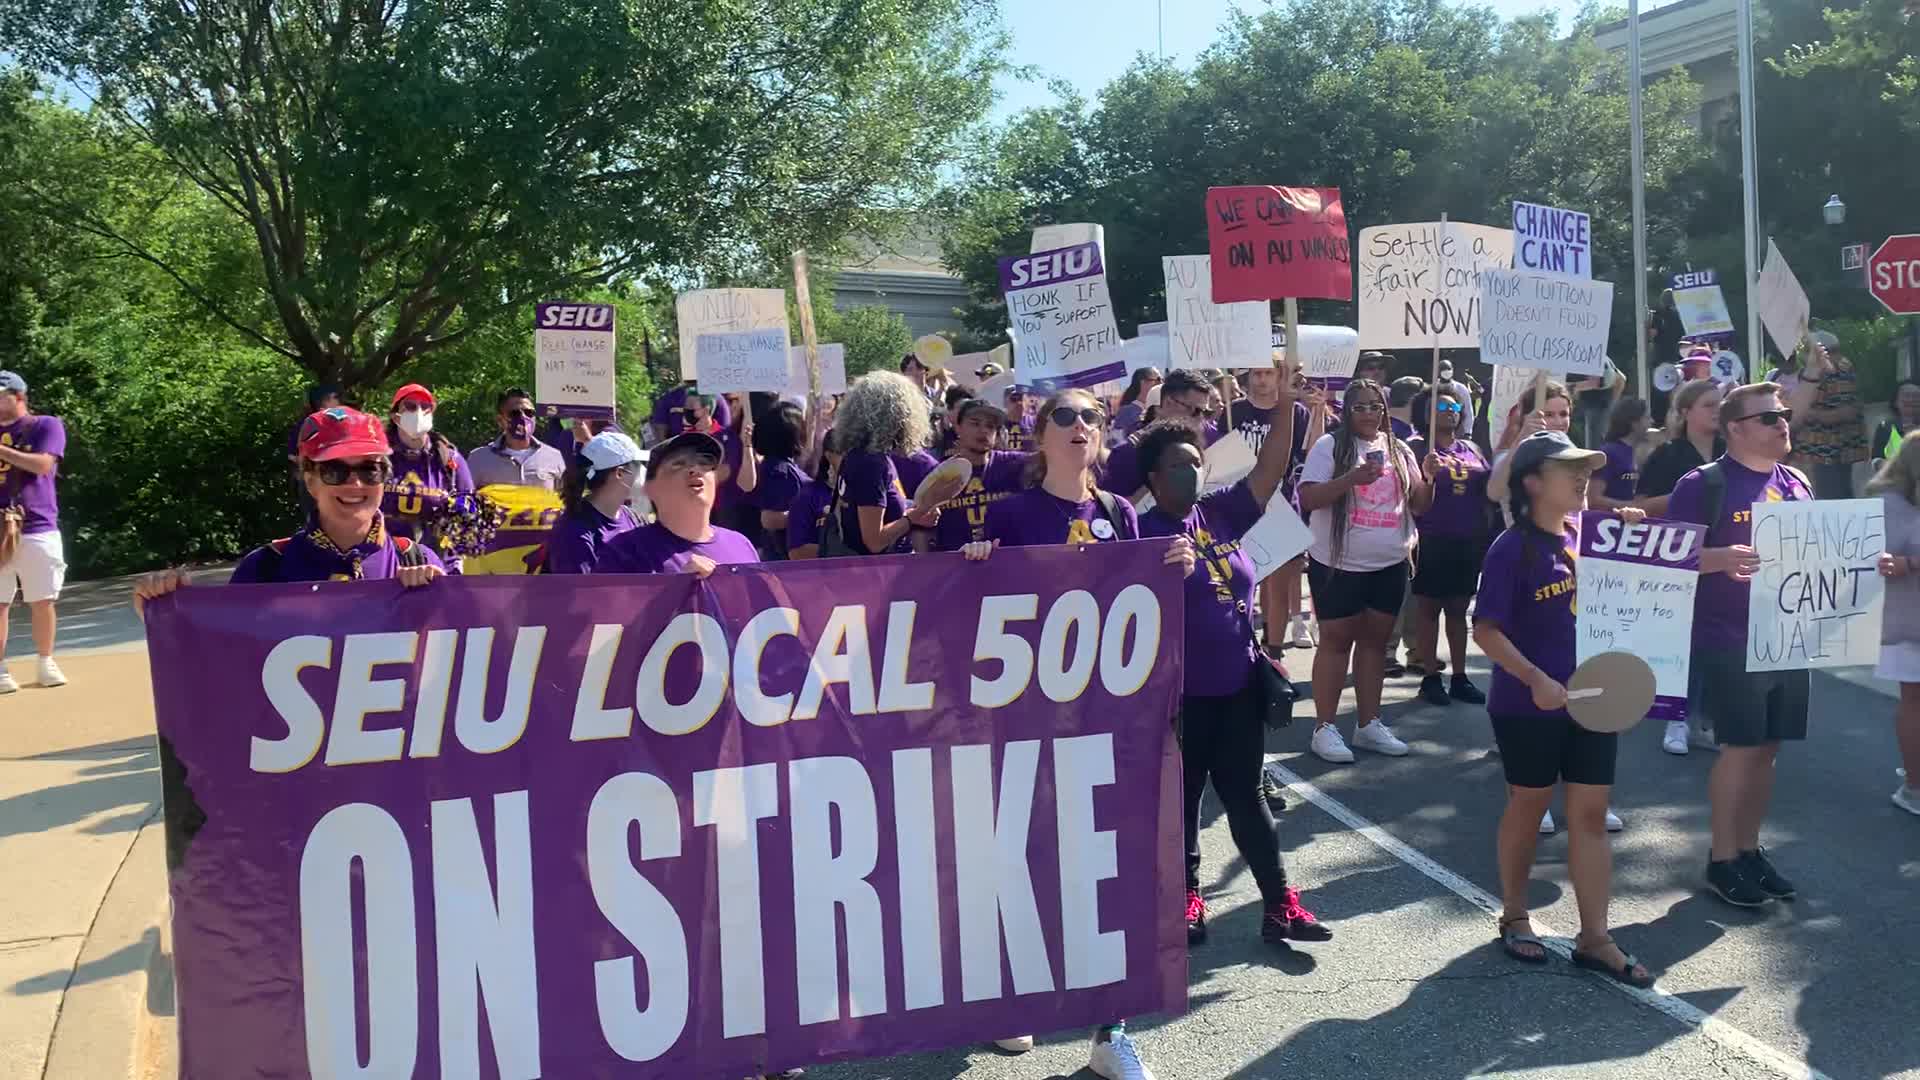 Video of the Strike (19) by Amanda Kleinman